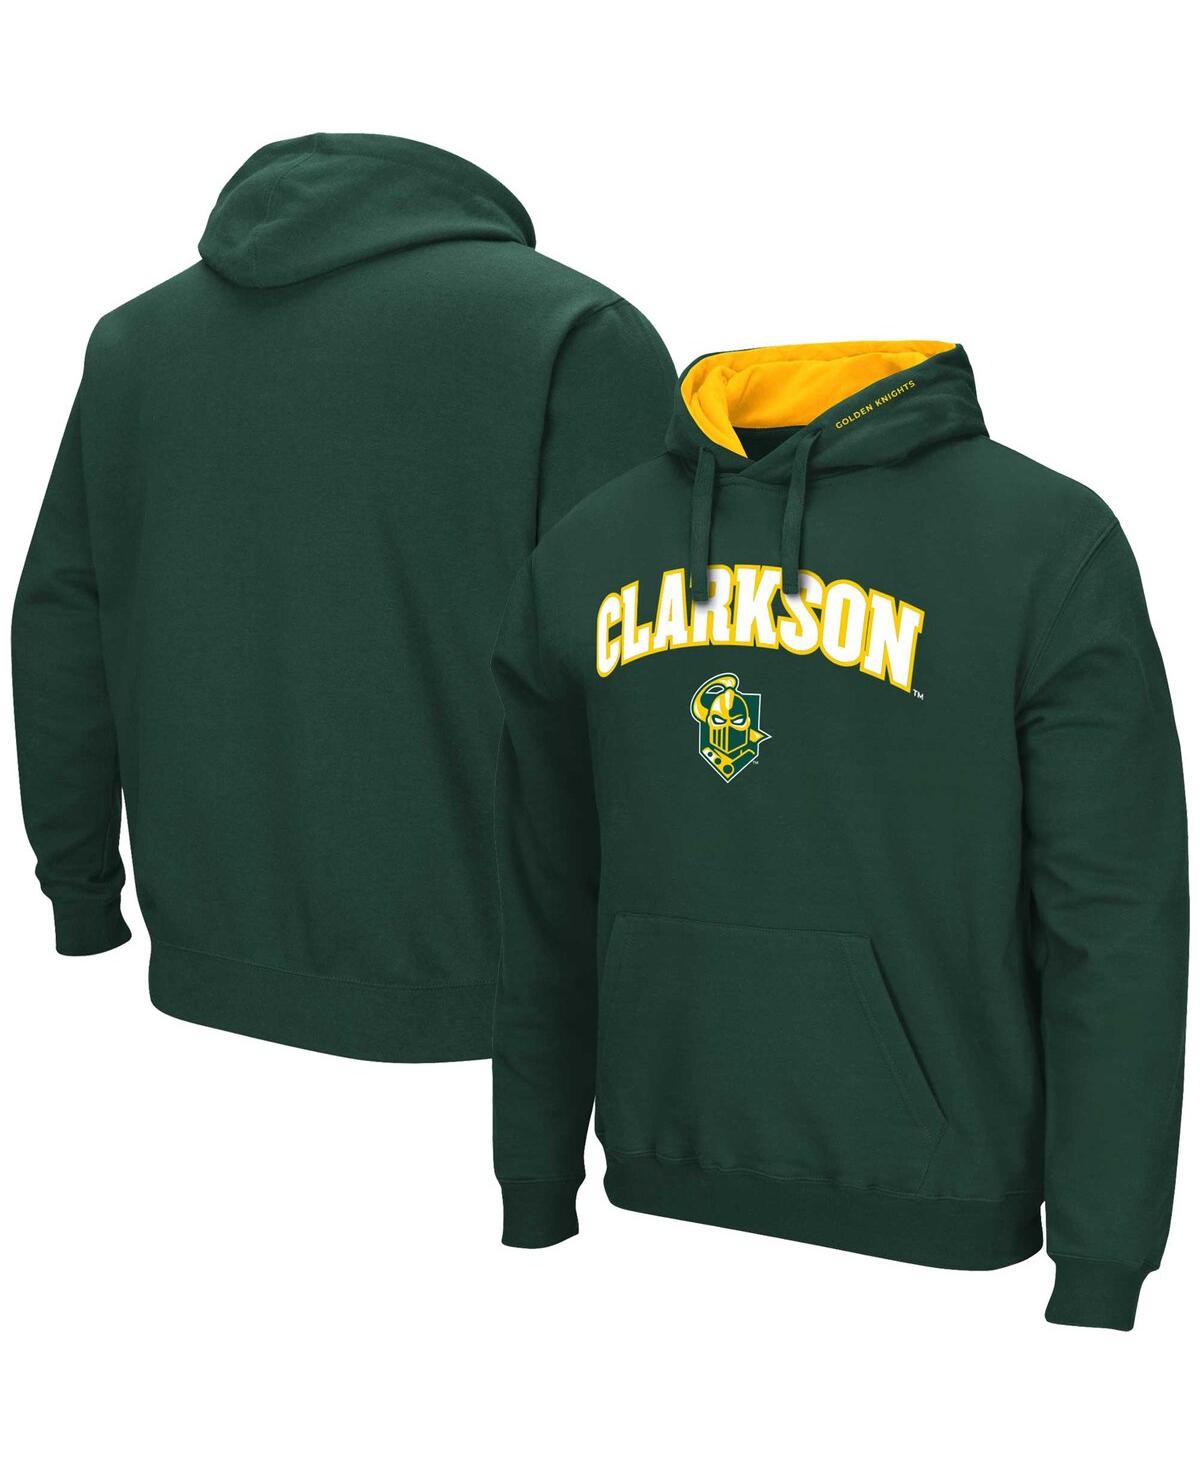 Shop Colosseum Men's  Green Clarkson Golden Knights Arch & Logo Pullover Hoodie